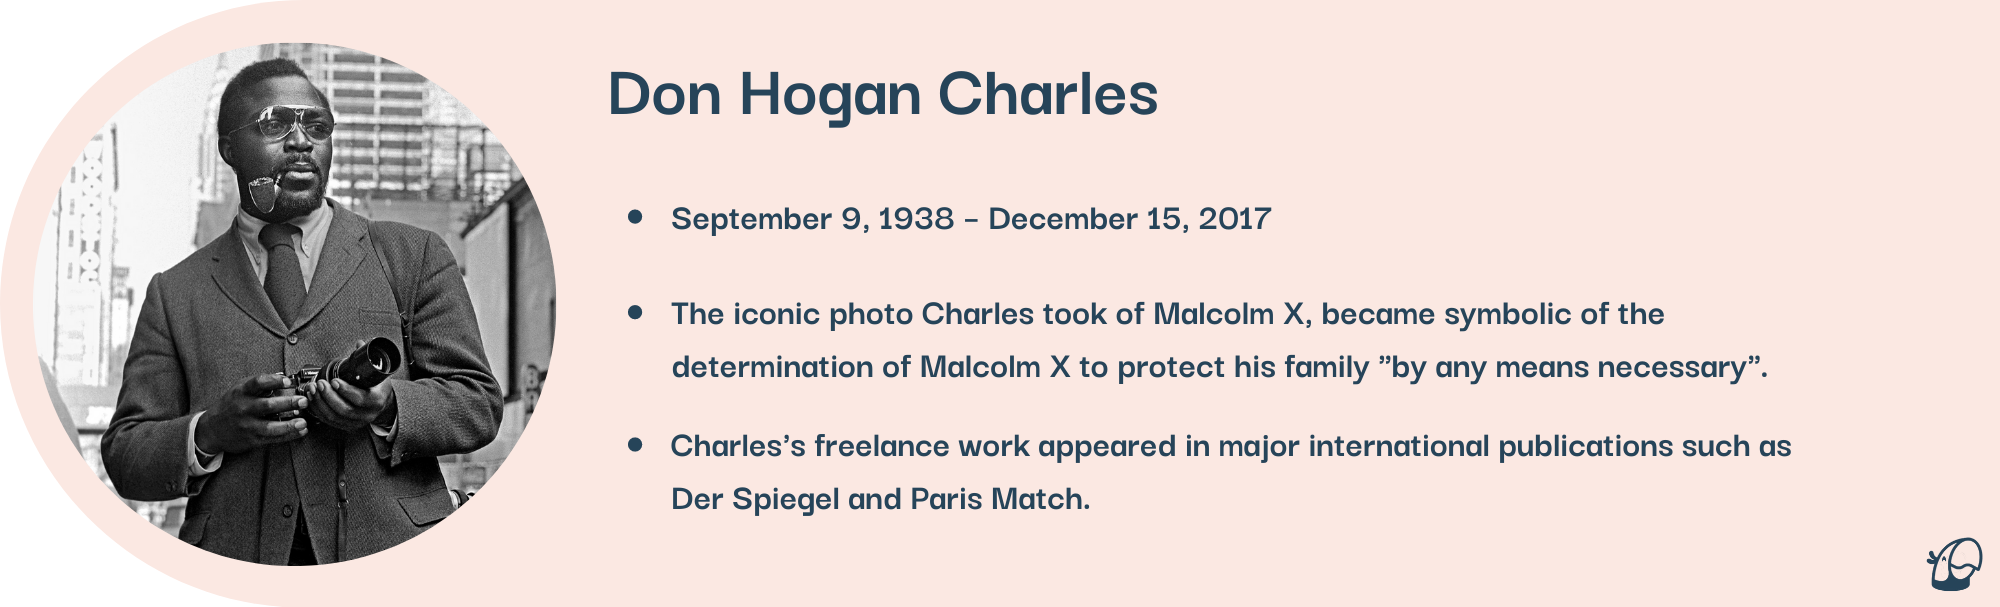 Don Hogan Charles Black History Month